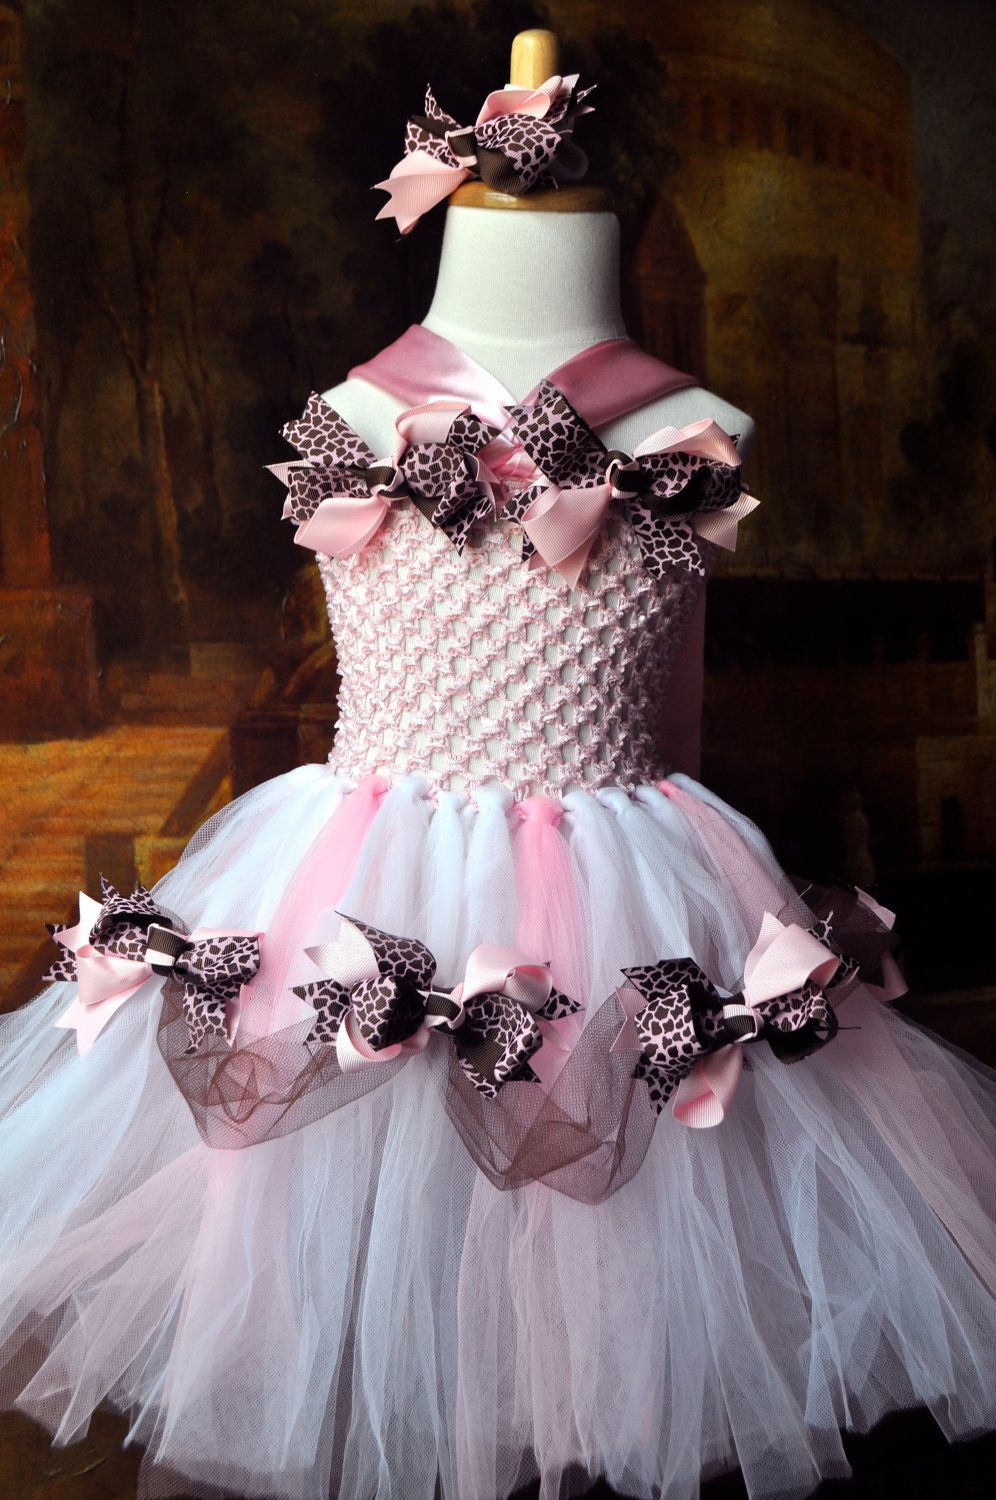 DIY Tulle Toddler Dress
 leopard light pink handmade tutu dress matching ribbon